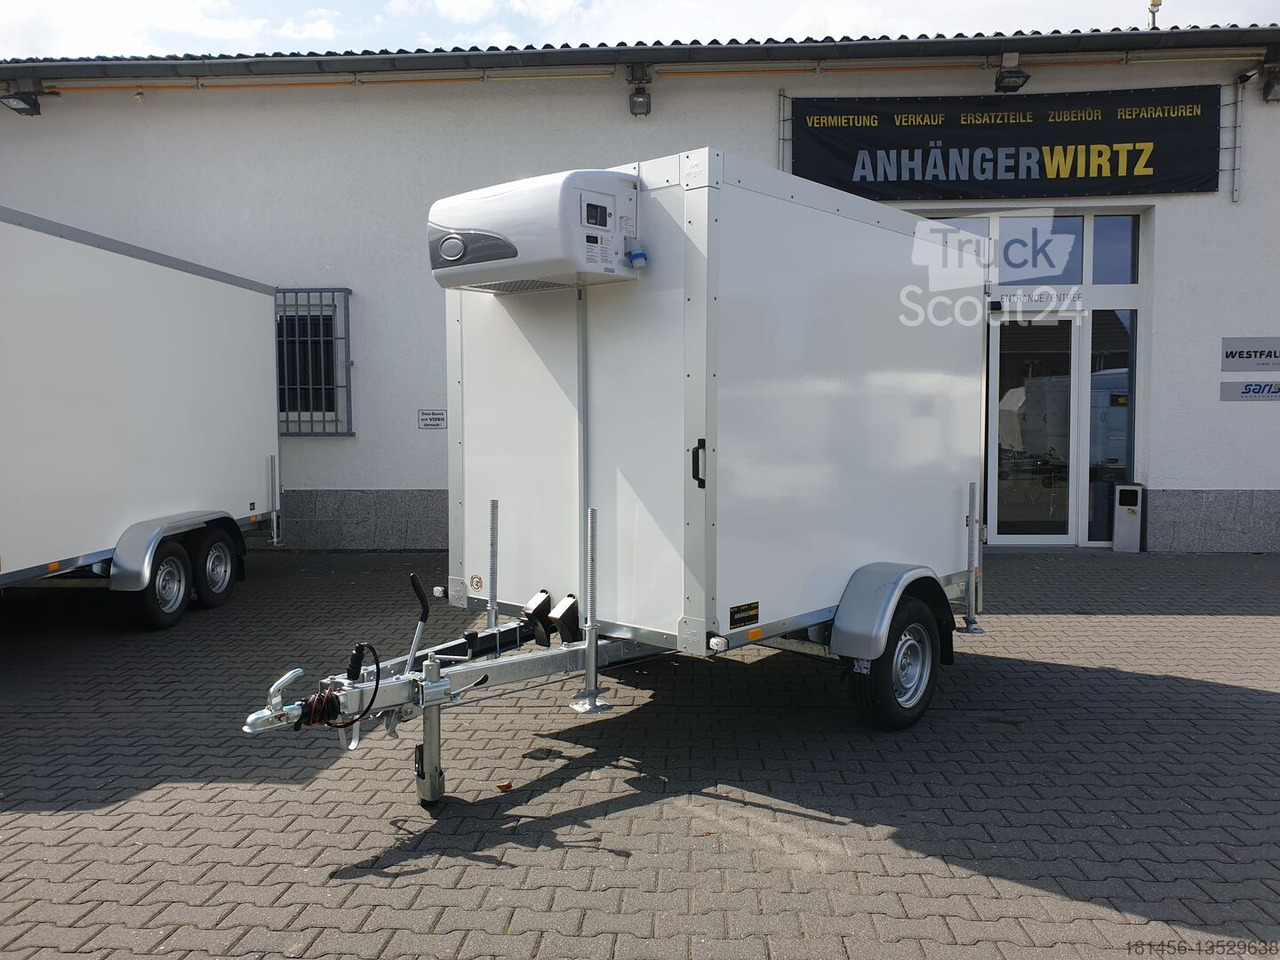 Ny Kjølehenger mobile Kühlzelle 60mm isoliert mit Standstützen 230Volt Govi Kühlung direkt verfügbar Neu: bilde 3